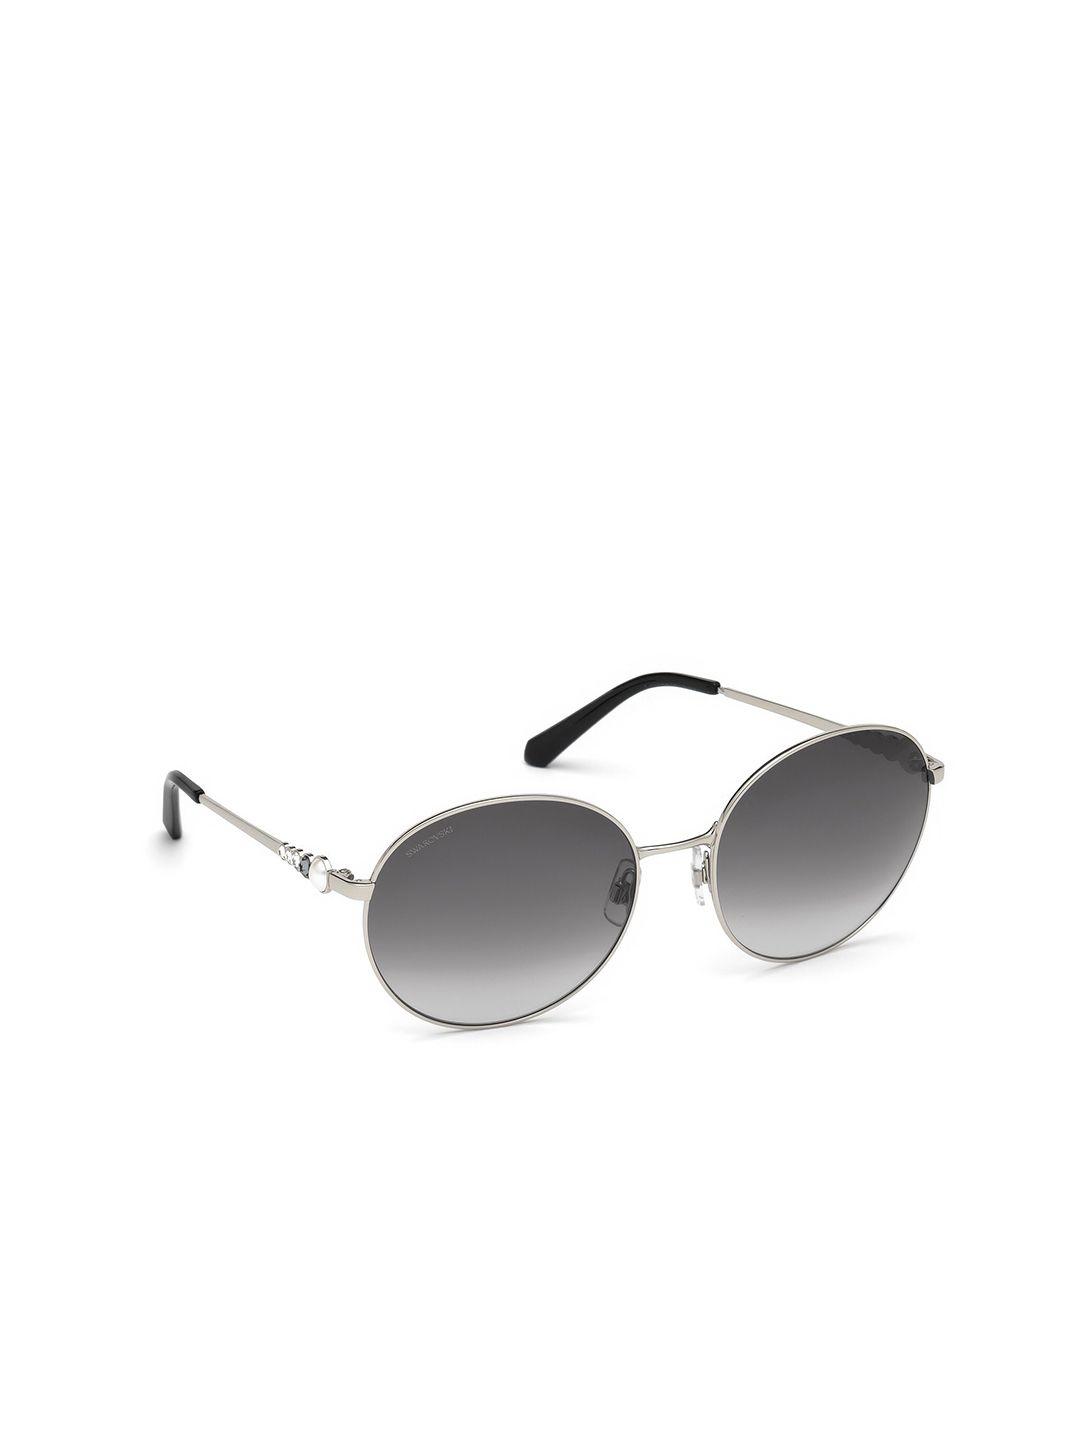 swarovski-women-round-sunglasses